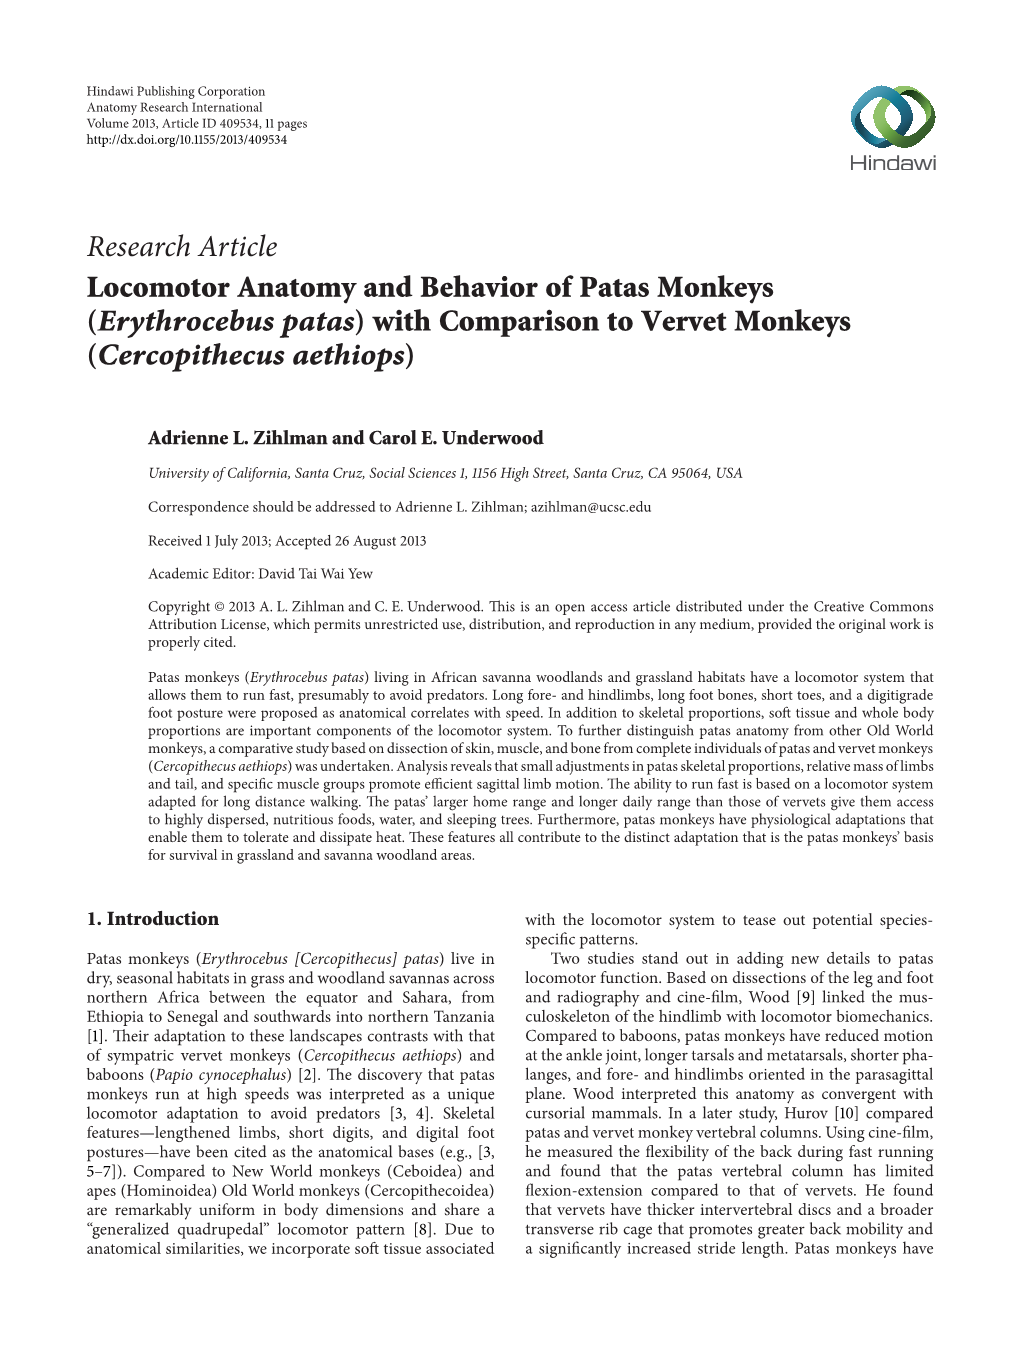 Locomotor Anatomy and Behavior of Patas Monkeys (Erythrocebus Patas) with Comparison to Vervet Monkeys (Cercopithecus Aethiops)